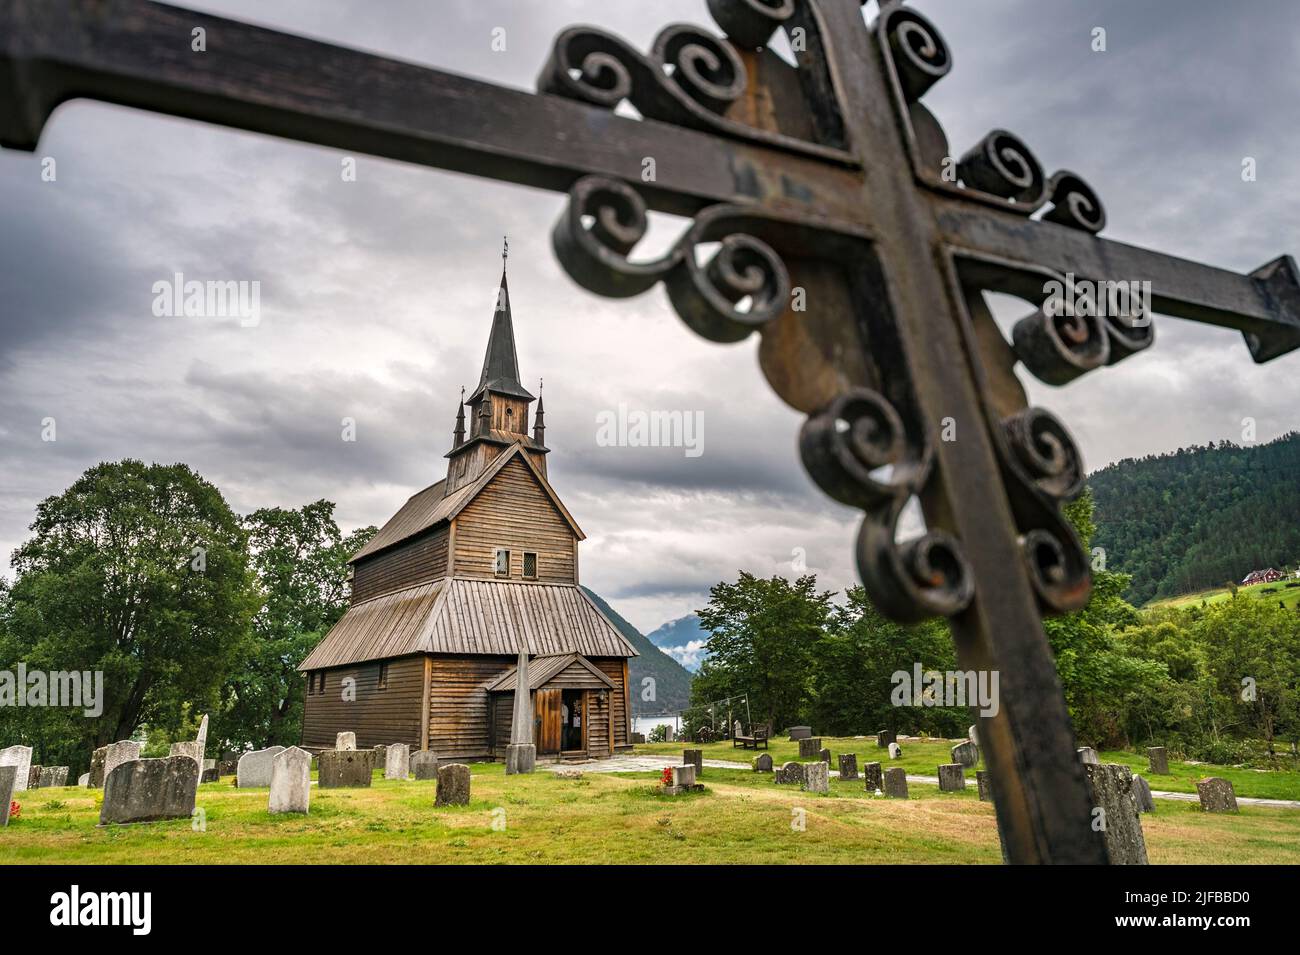 Norvegia, Contea di Sogn og Fjordane, Laerdal, chiesa a doghe (stavkyrjke) Foto Stock